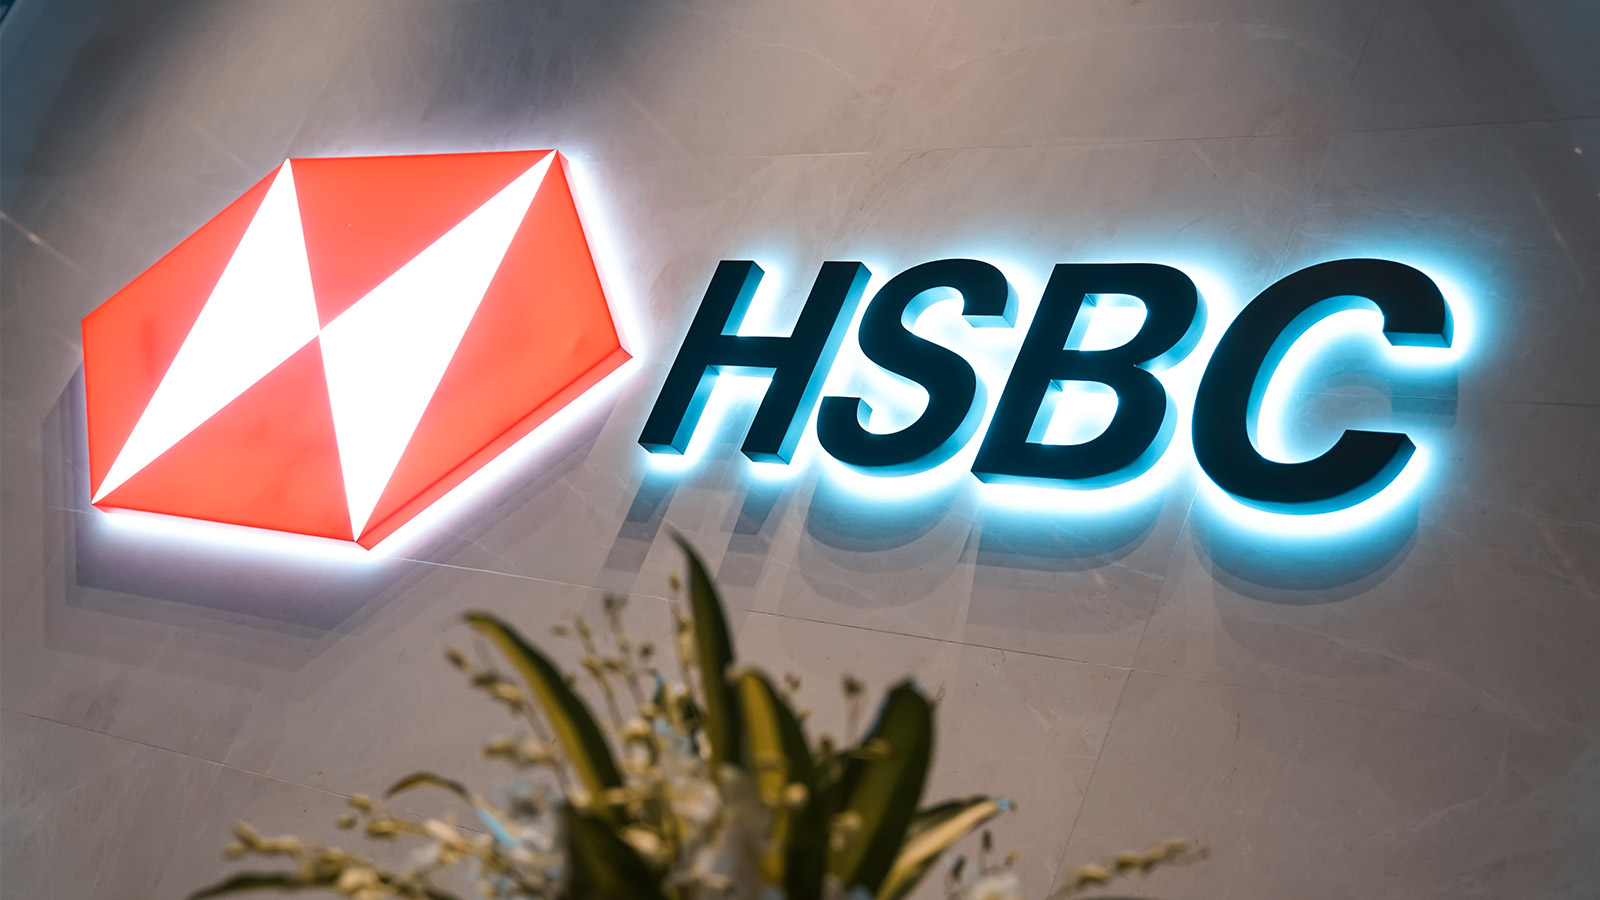 Hsbc Holdings